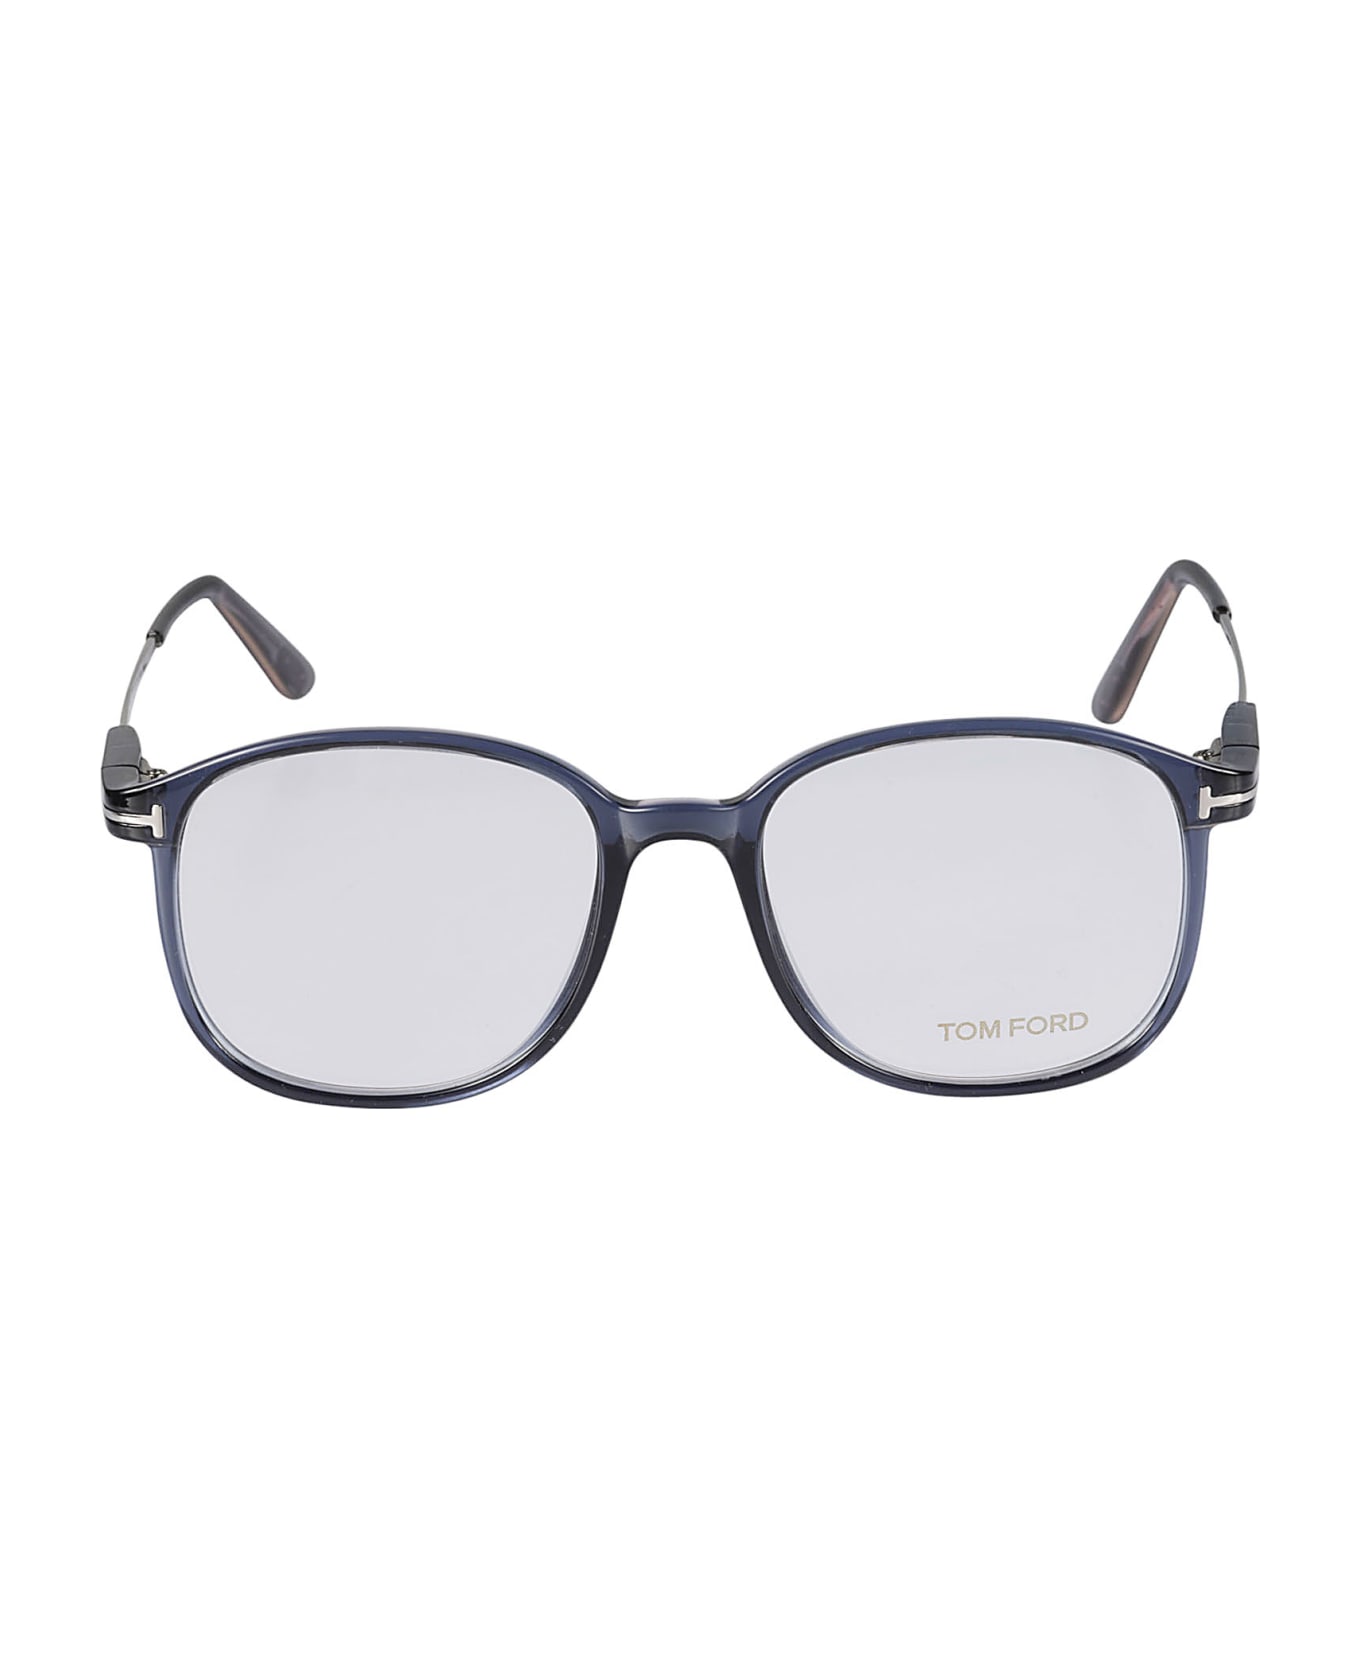 Tom Ford Eyewear Round Clear Lens Glasses - N/A